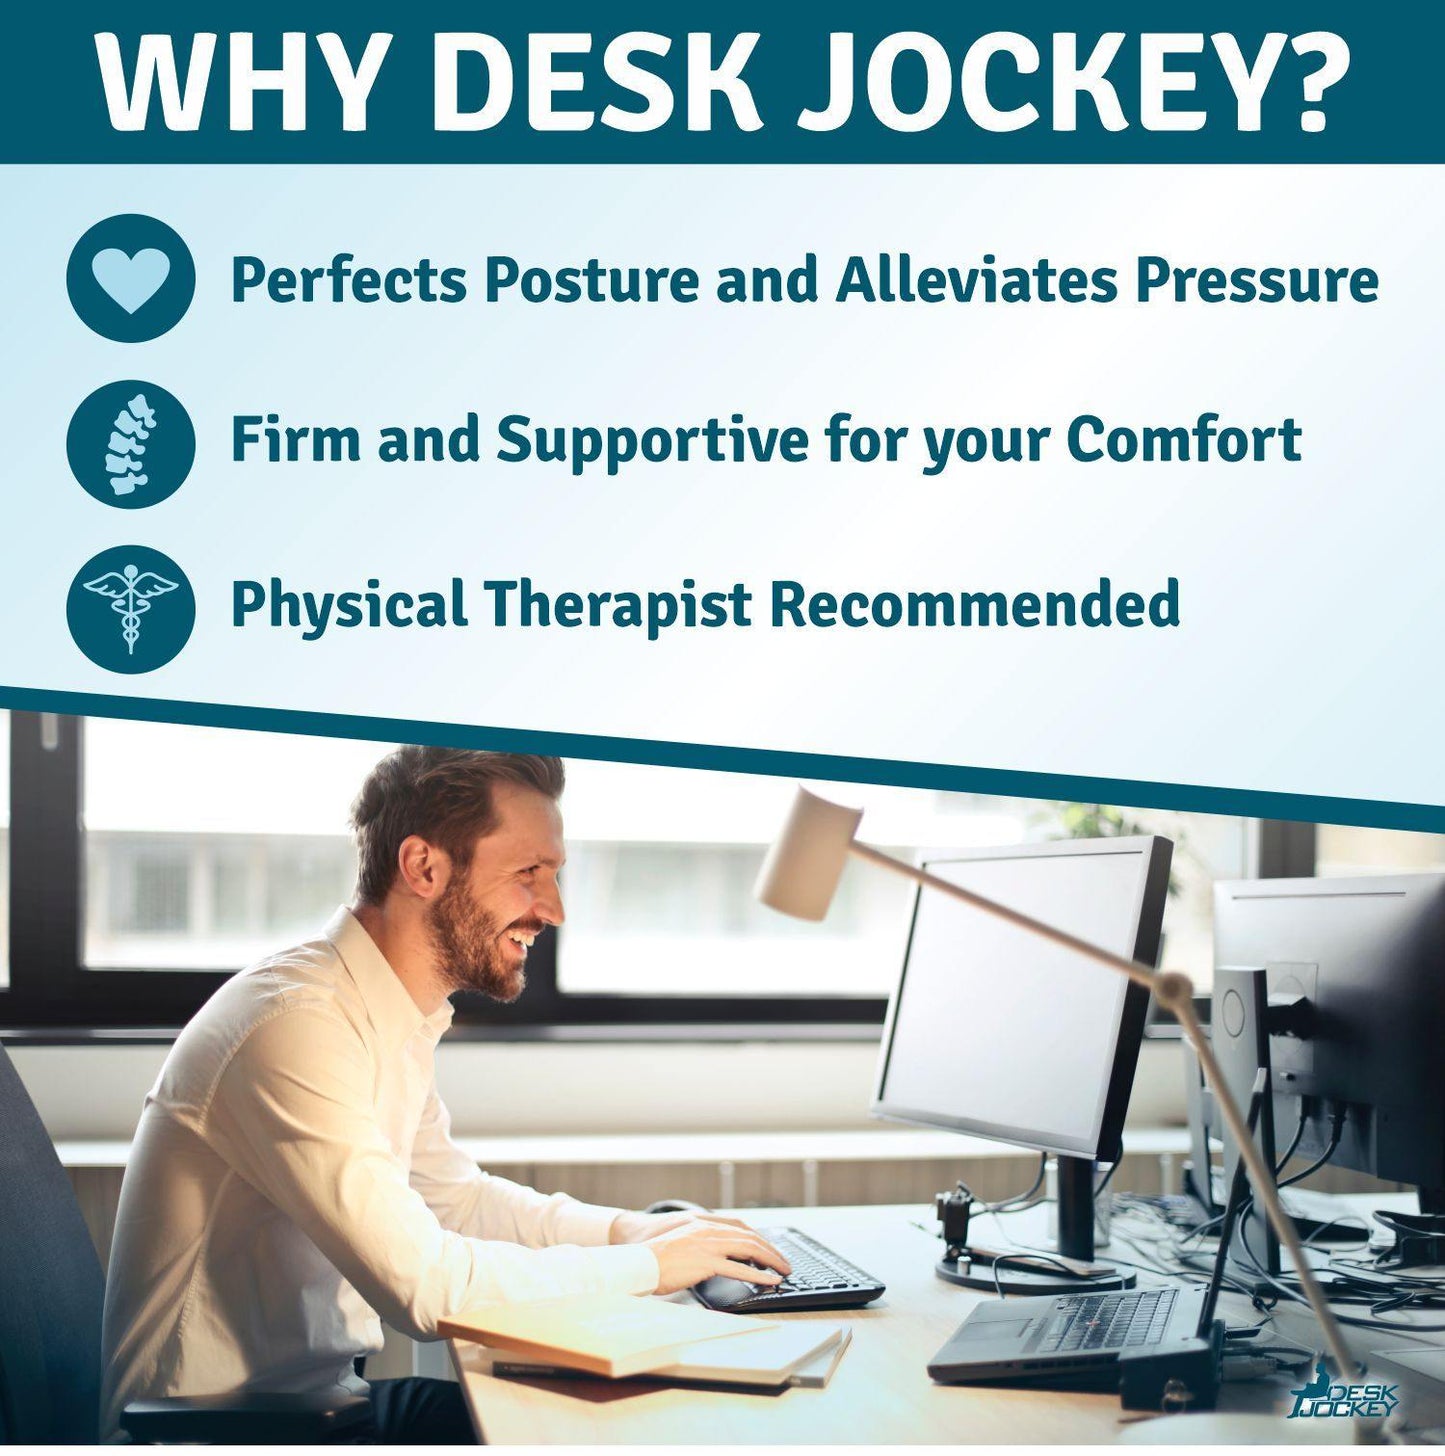 Most Comfortable Car Seat Wedge Cushion - Desk Jockey – Desk Jockey LLC